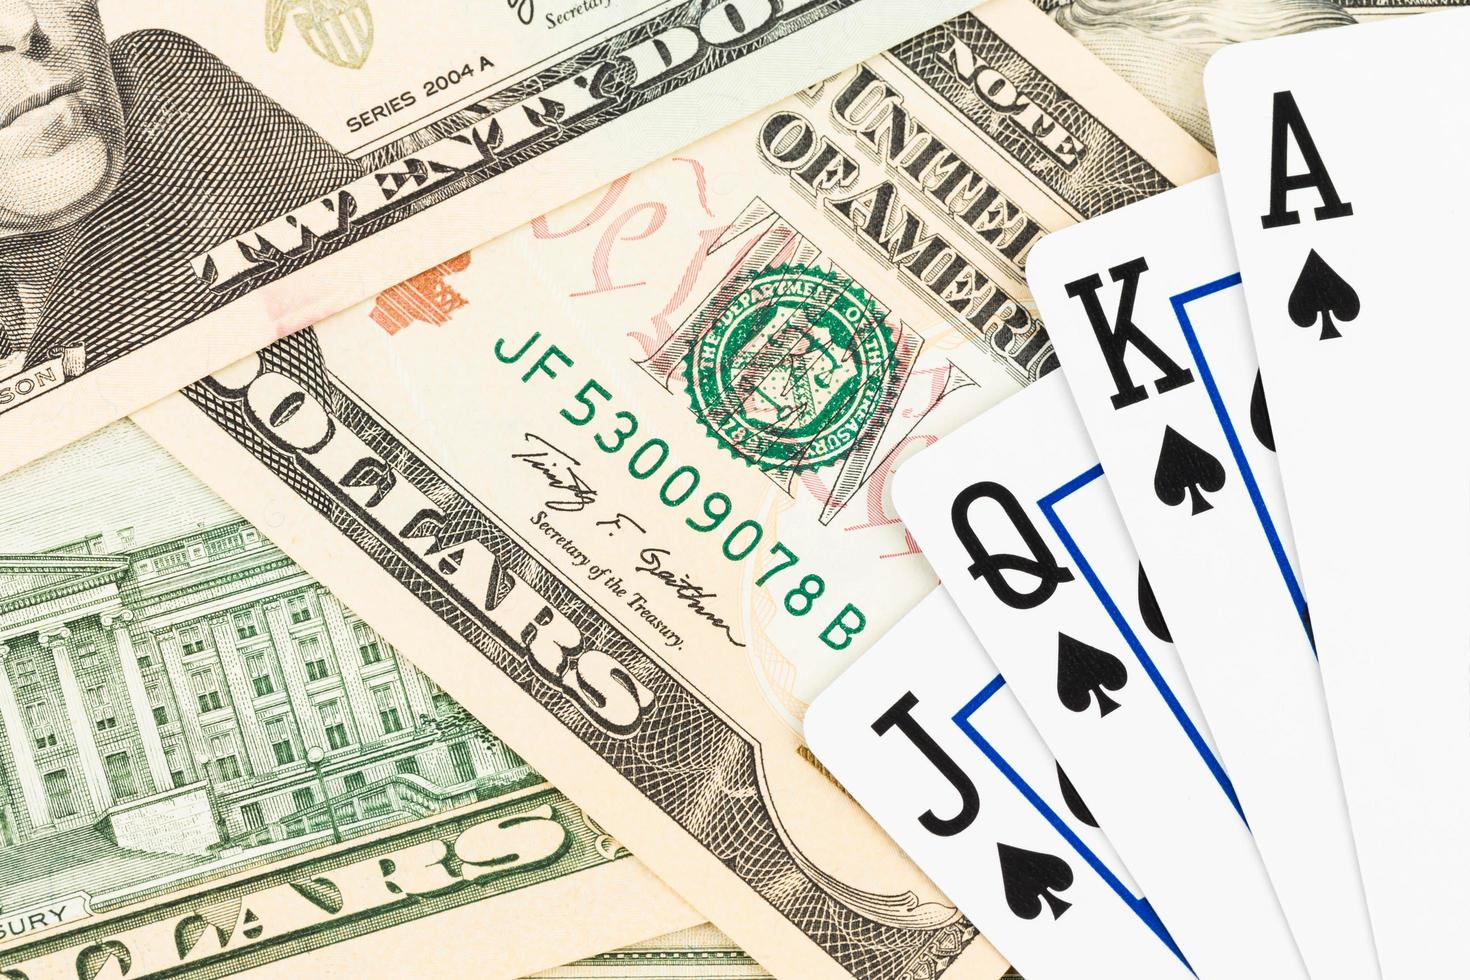 cartas de jogar poker royal flush na nota de dólar foto